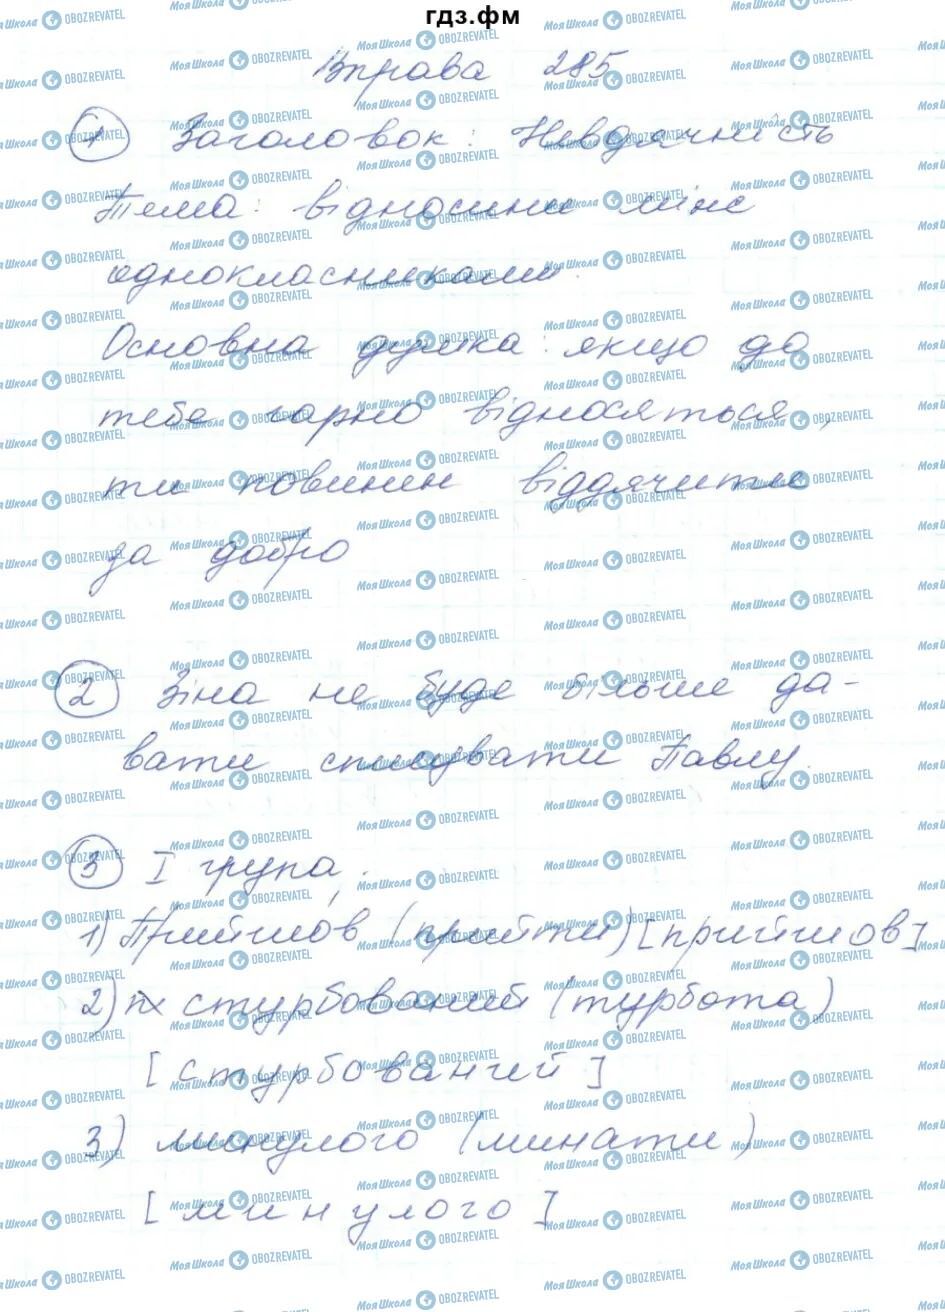 ГДЗ Укр мова 5 класс страница 285